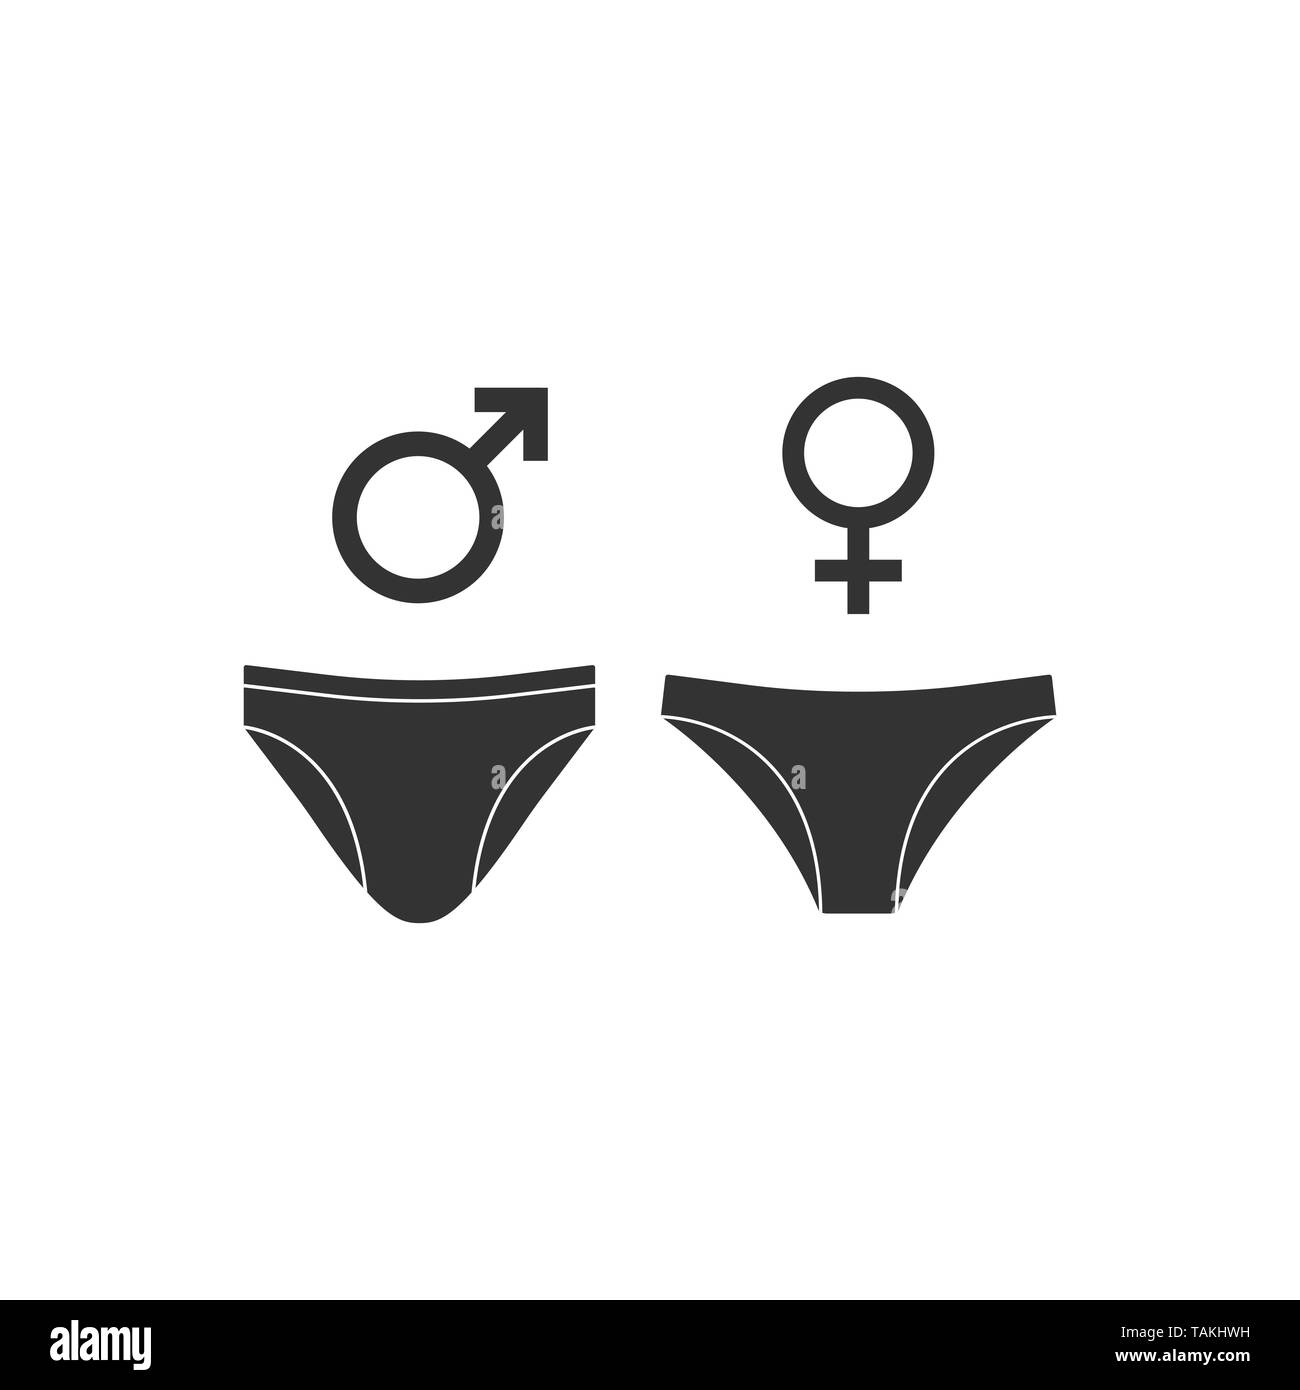 https://c8.alamy.com/comp/TAKHWH/vector-illustration-flat-design-men-women-underwear-gender-icon-TAKHWH.jpg